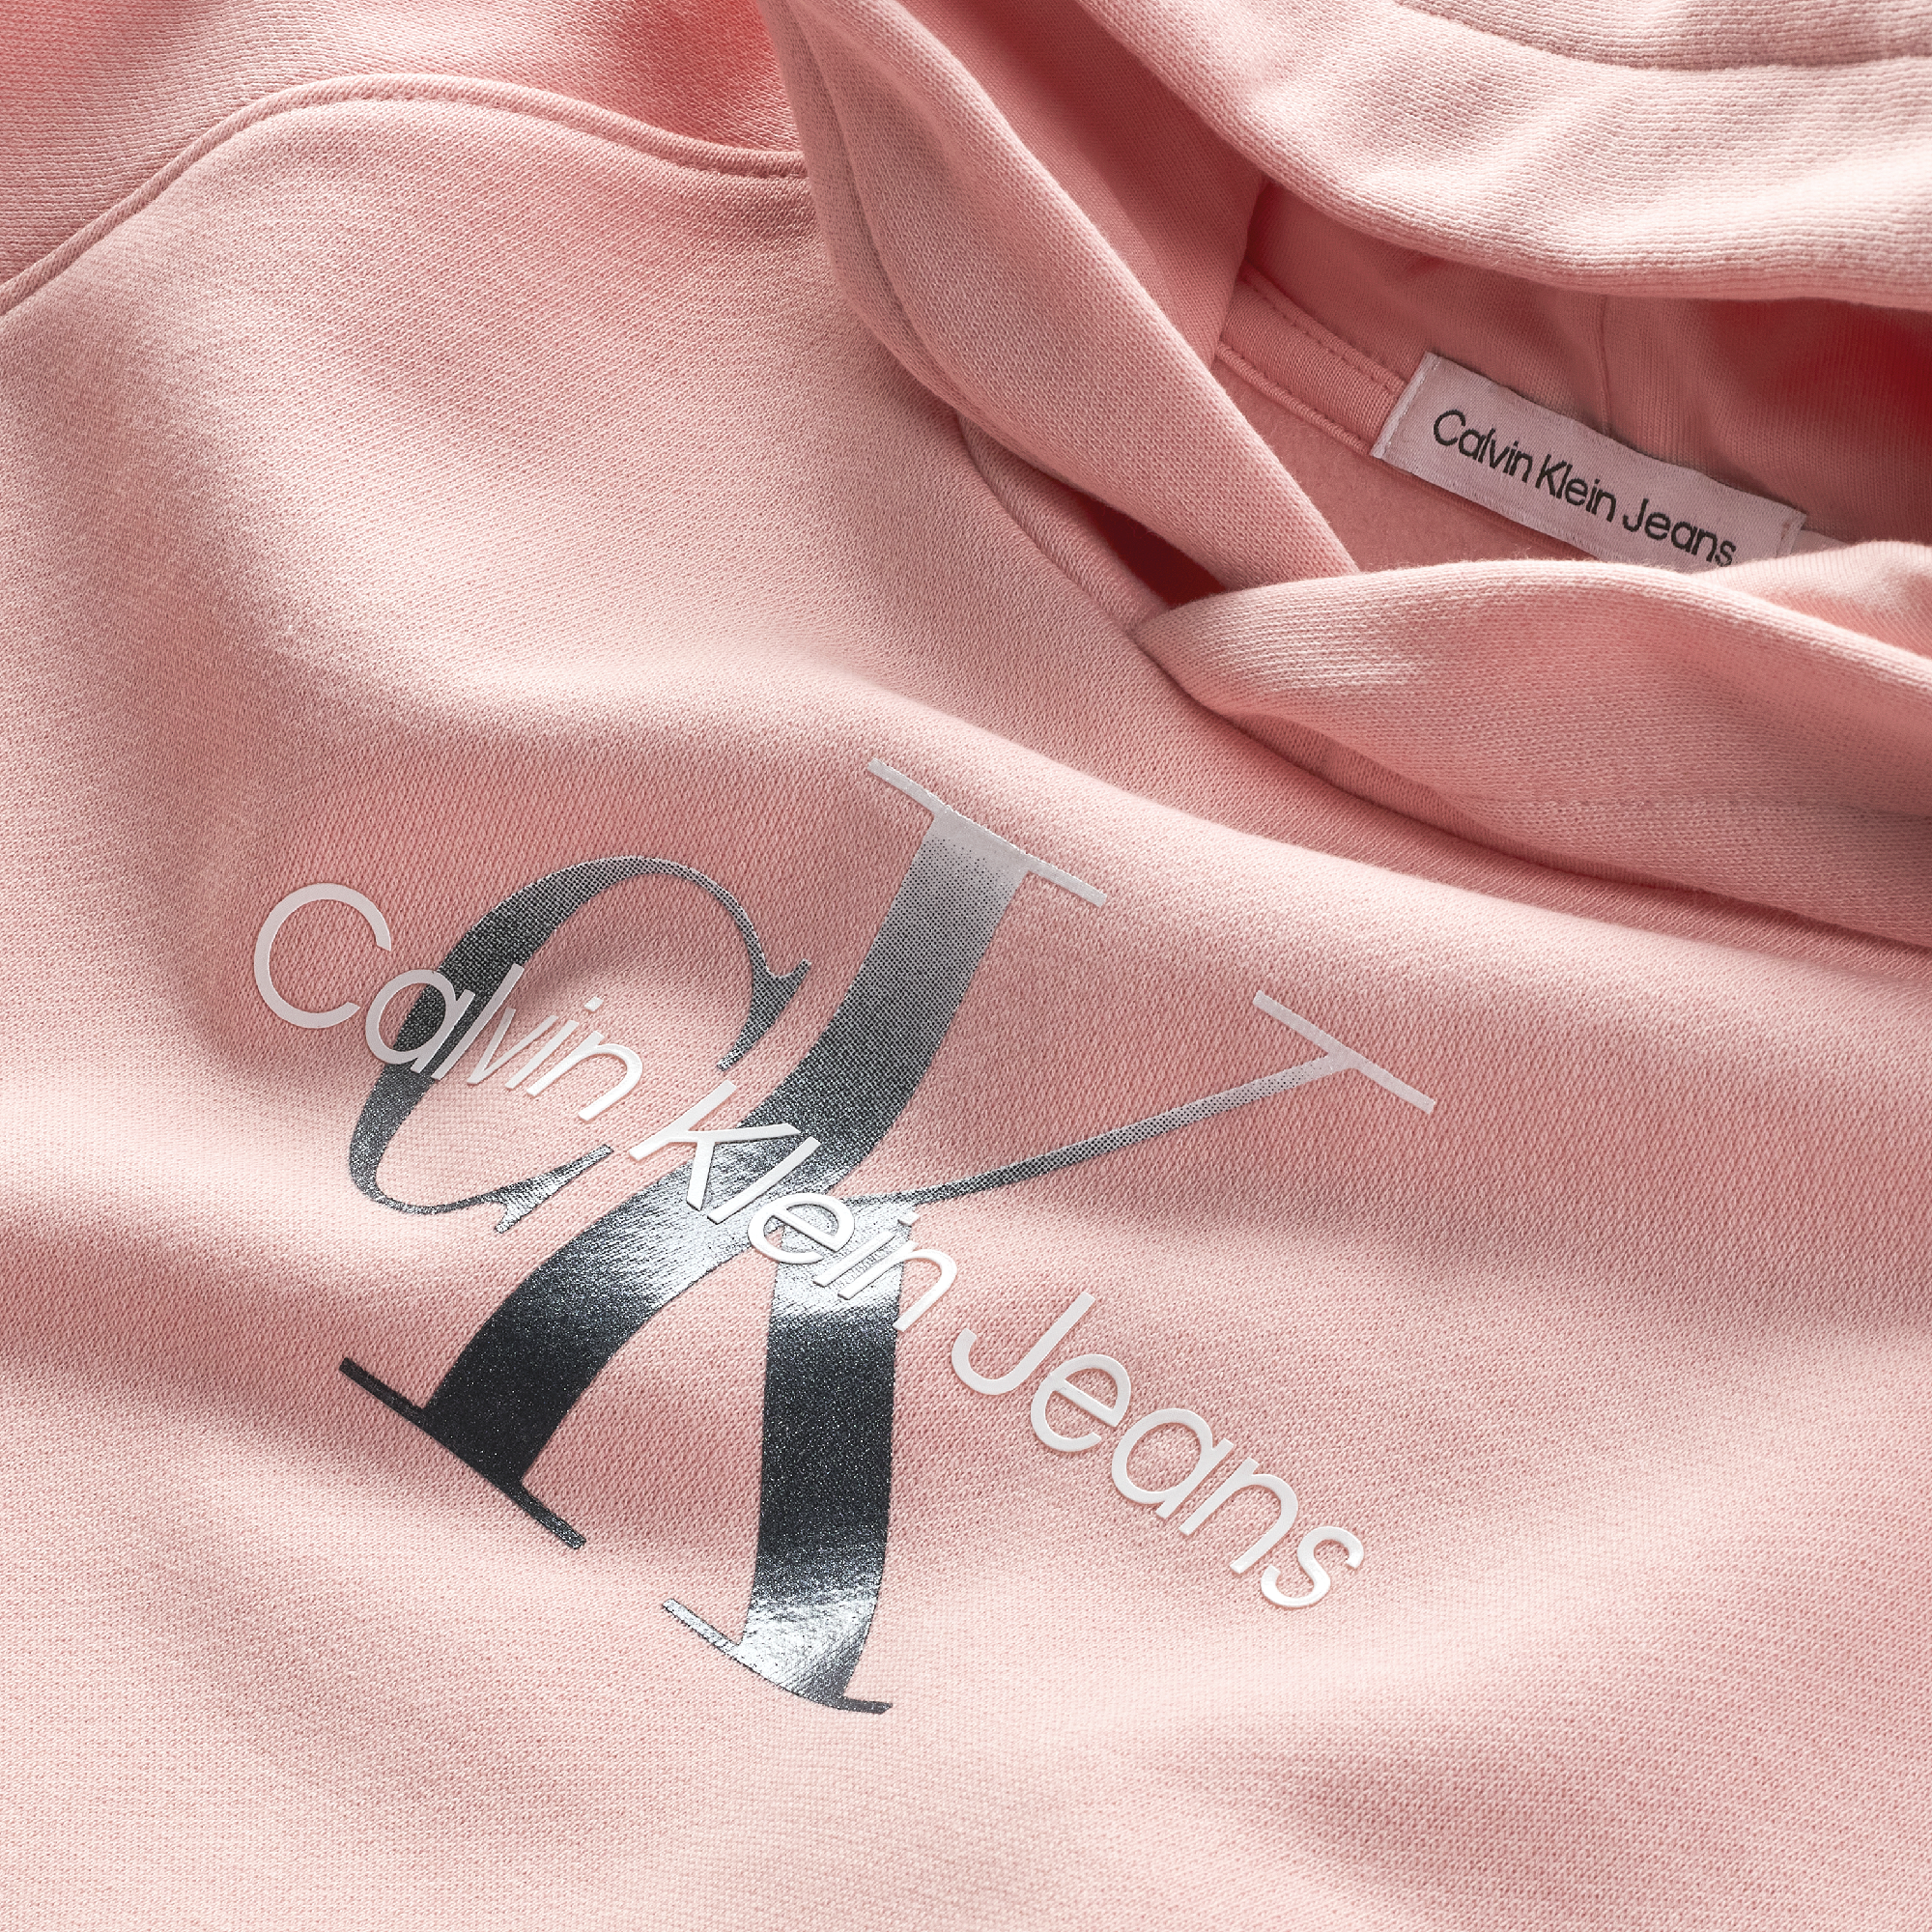 Meisjes GRADIENT MONOGRAM HOODIE van Calvin Klein in de kleur Pink Blush in maat 176.